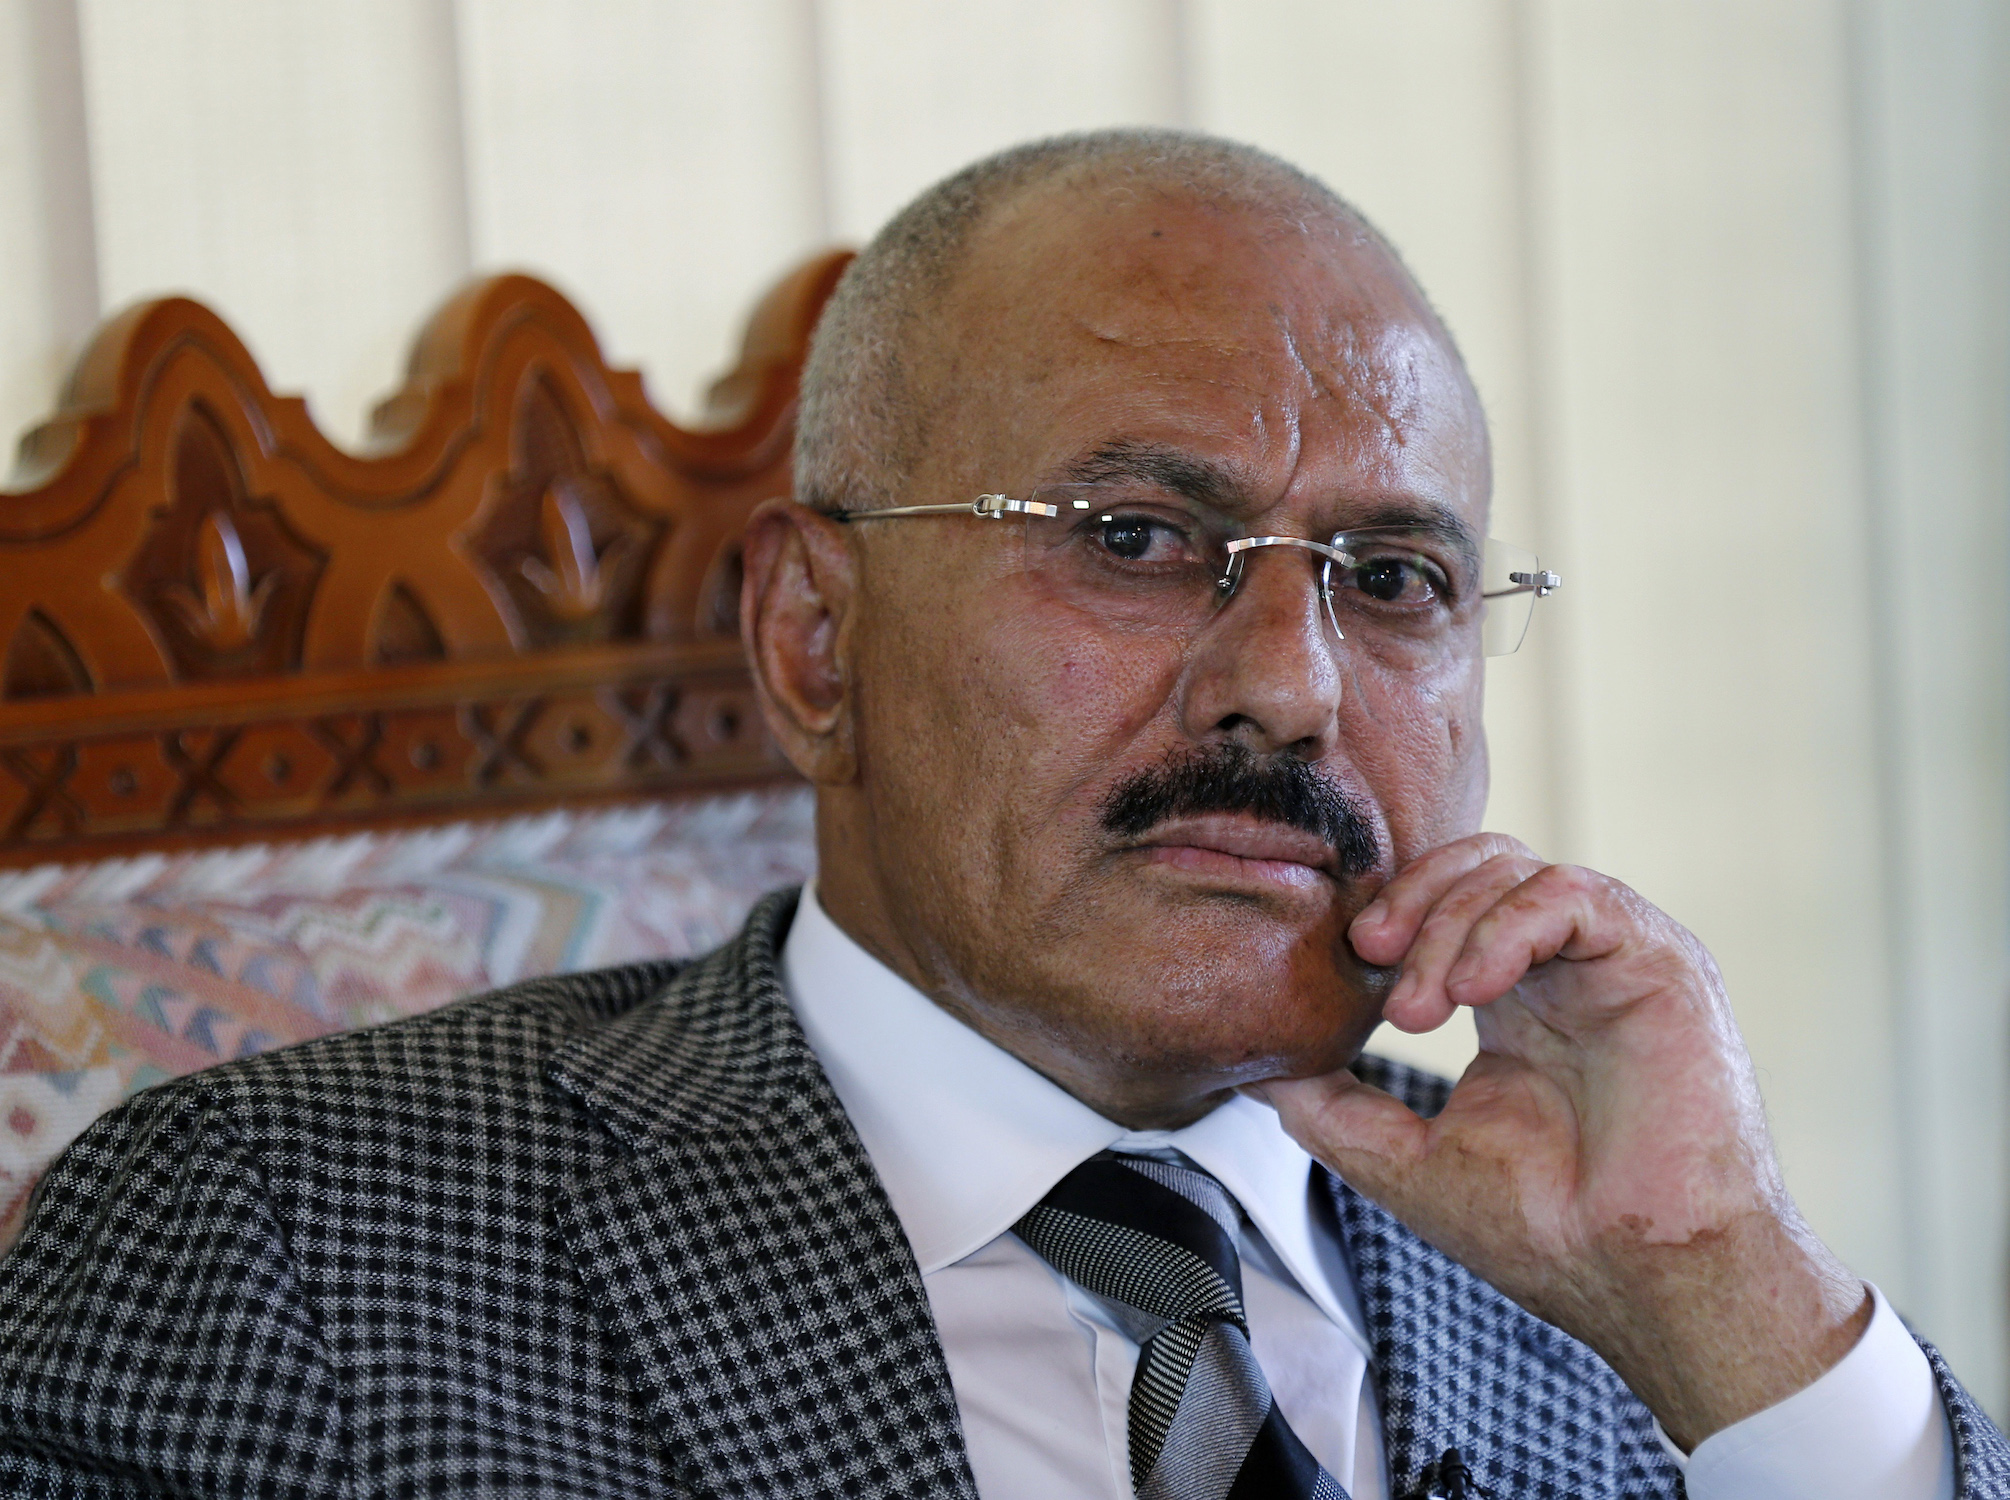 Ali Abdullah Saleh, former president of Yemen